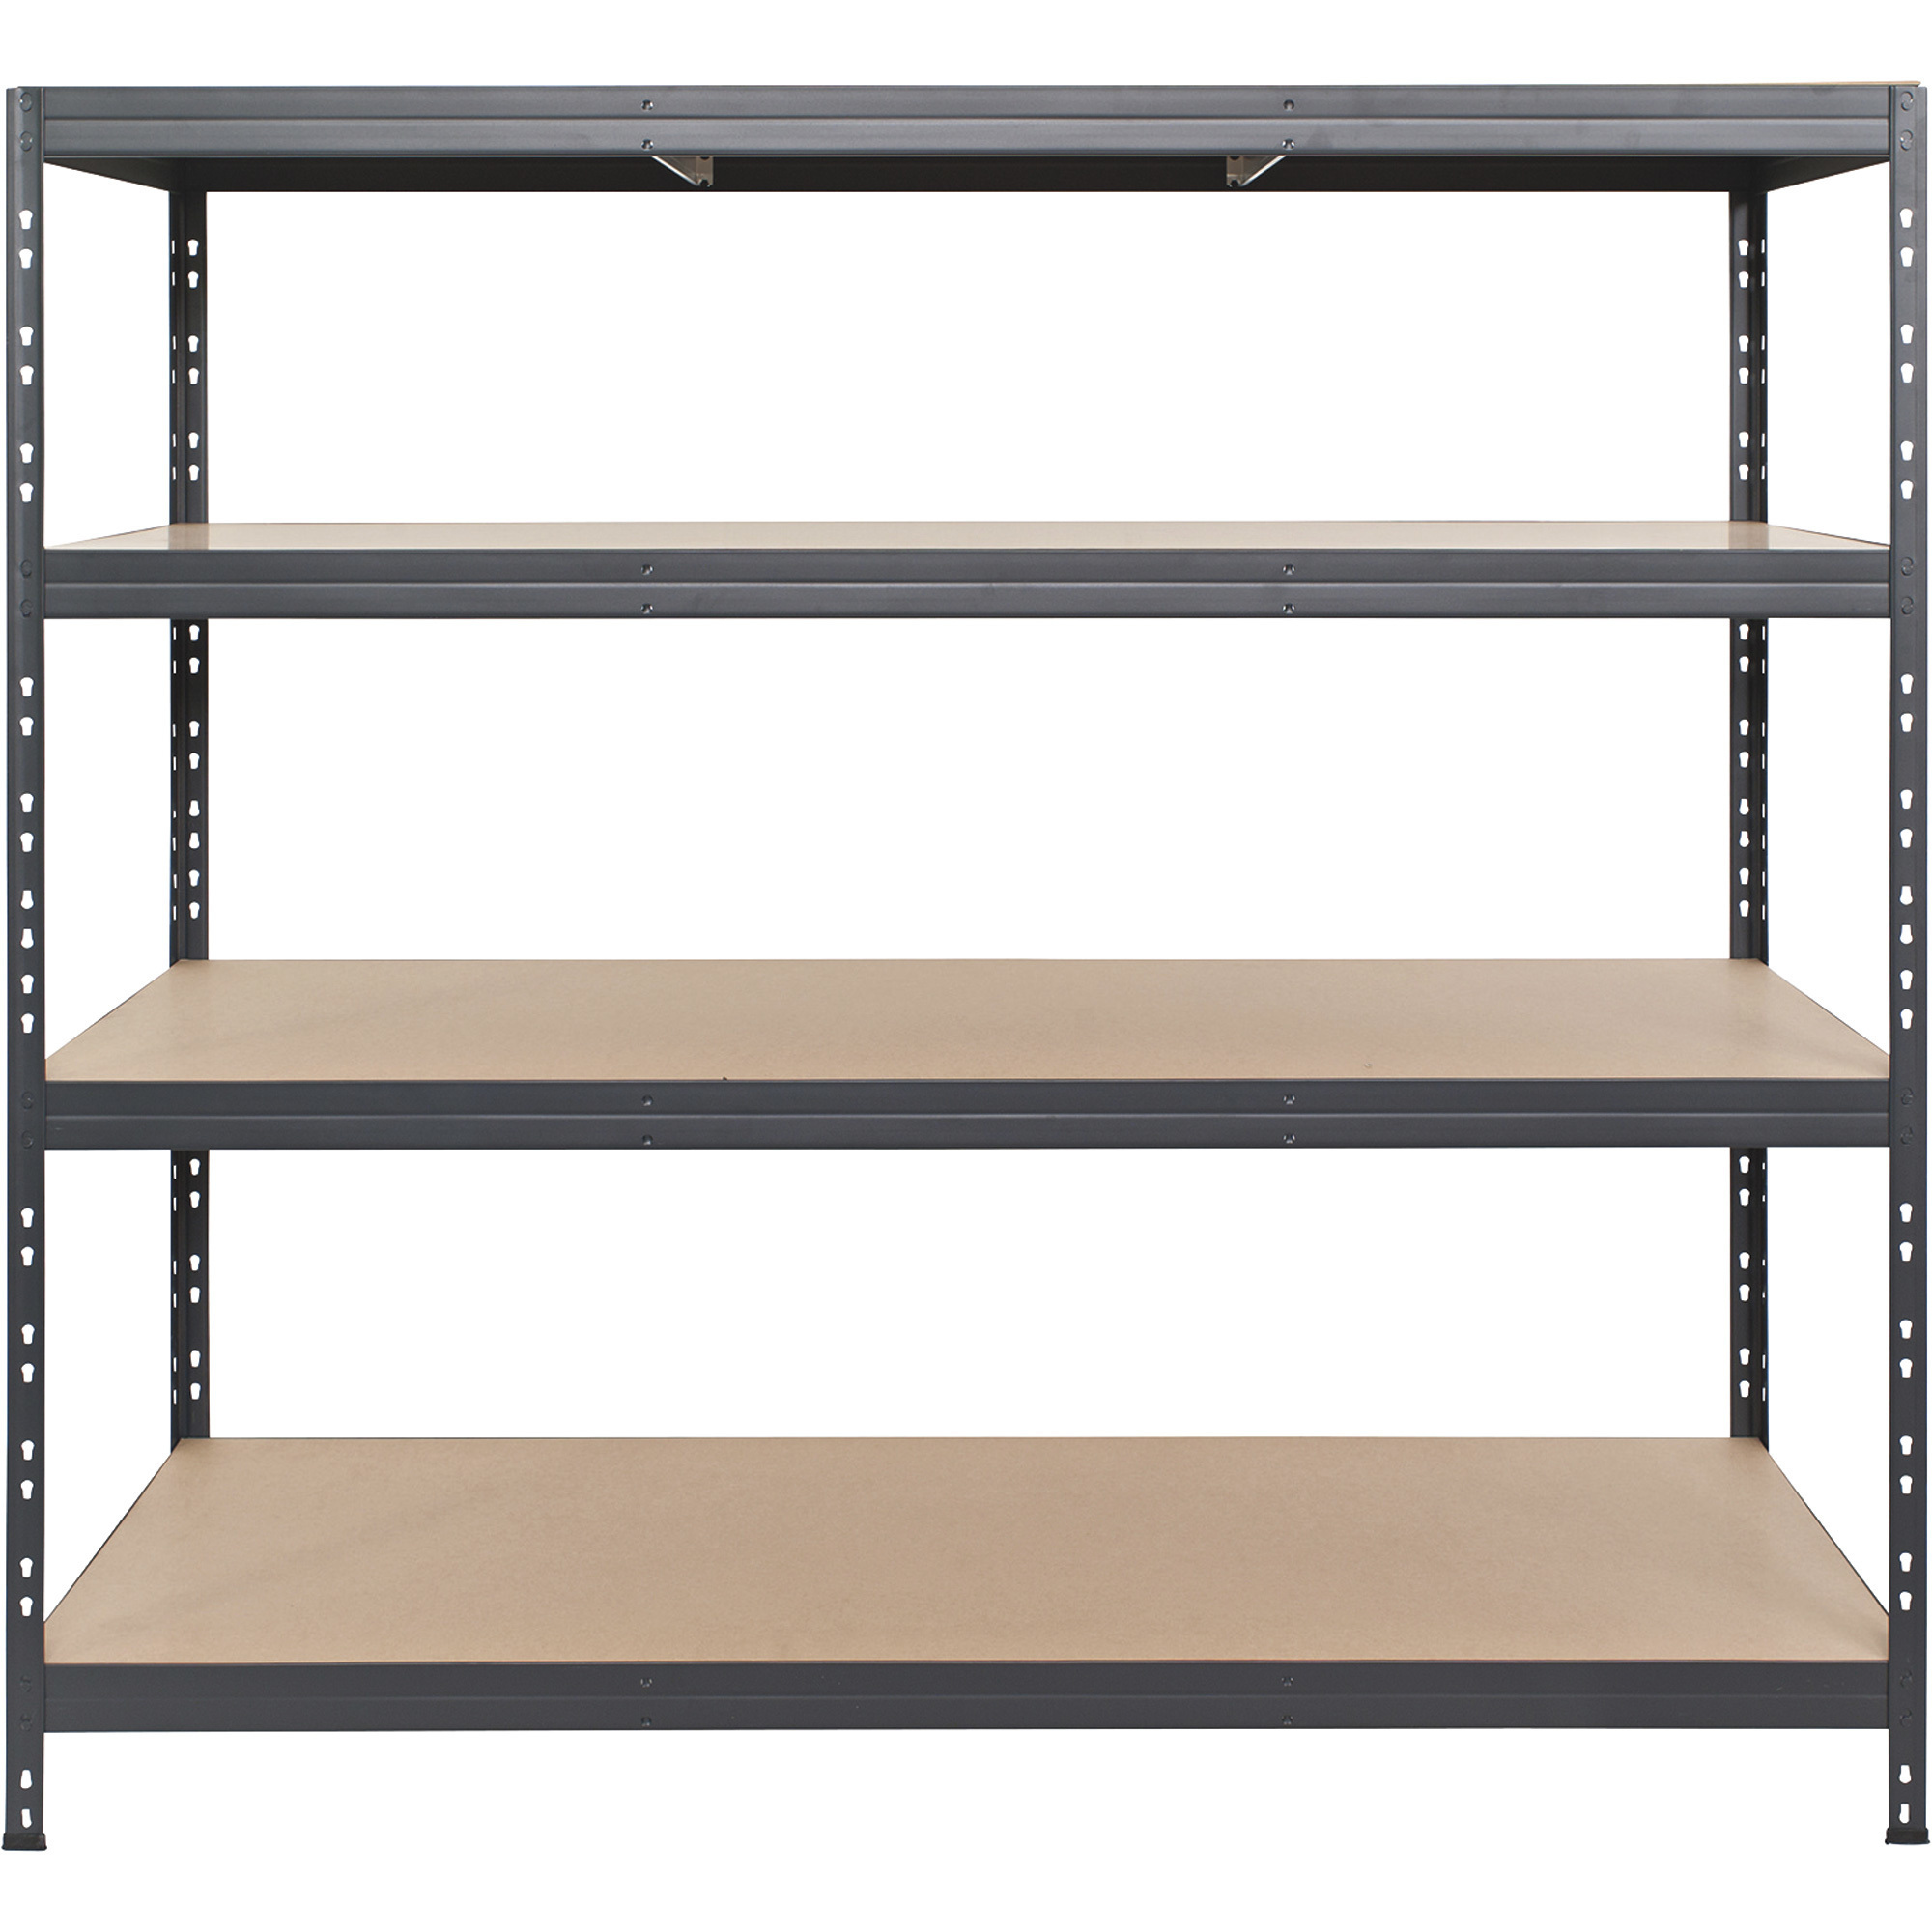 AR Shelving Fiberboard Deck Shelving â 4-Shelf Unit, 880-Lb. Capacity per Shelf, 71Inch W x 24Inch D x 71Inch H, Model TR18S406KHKFD9TG00